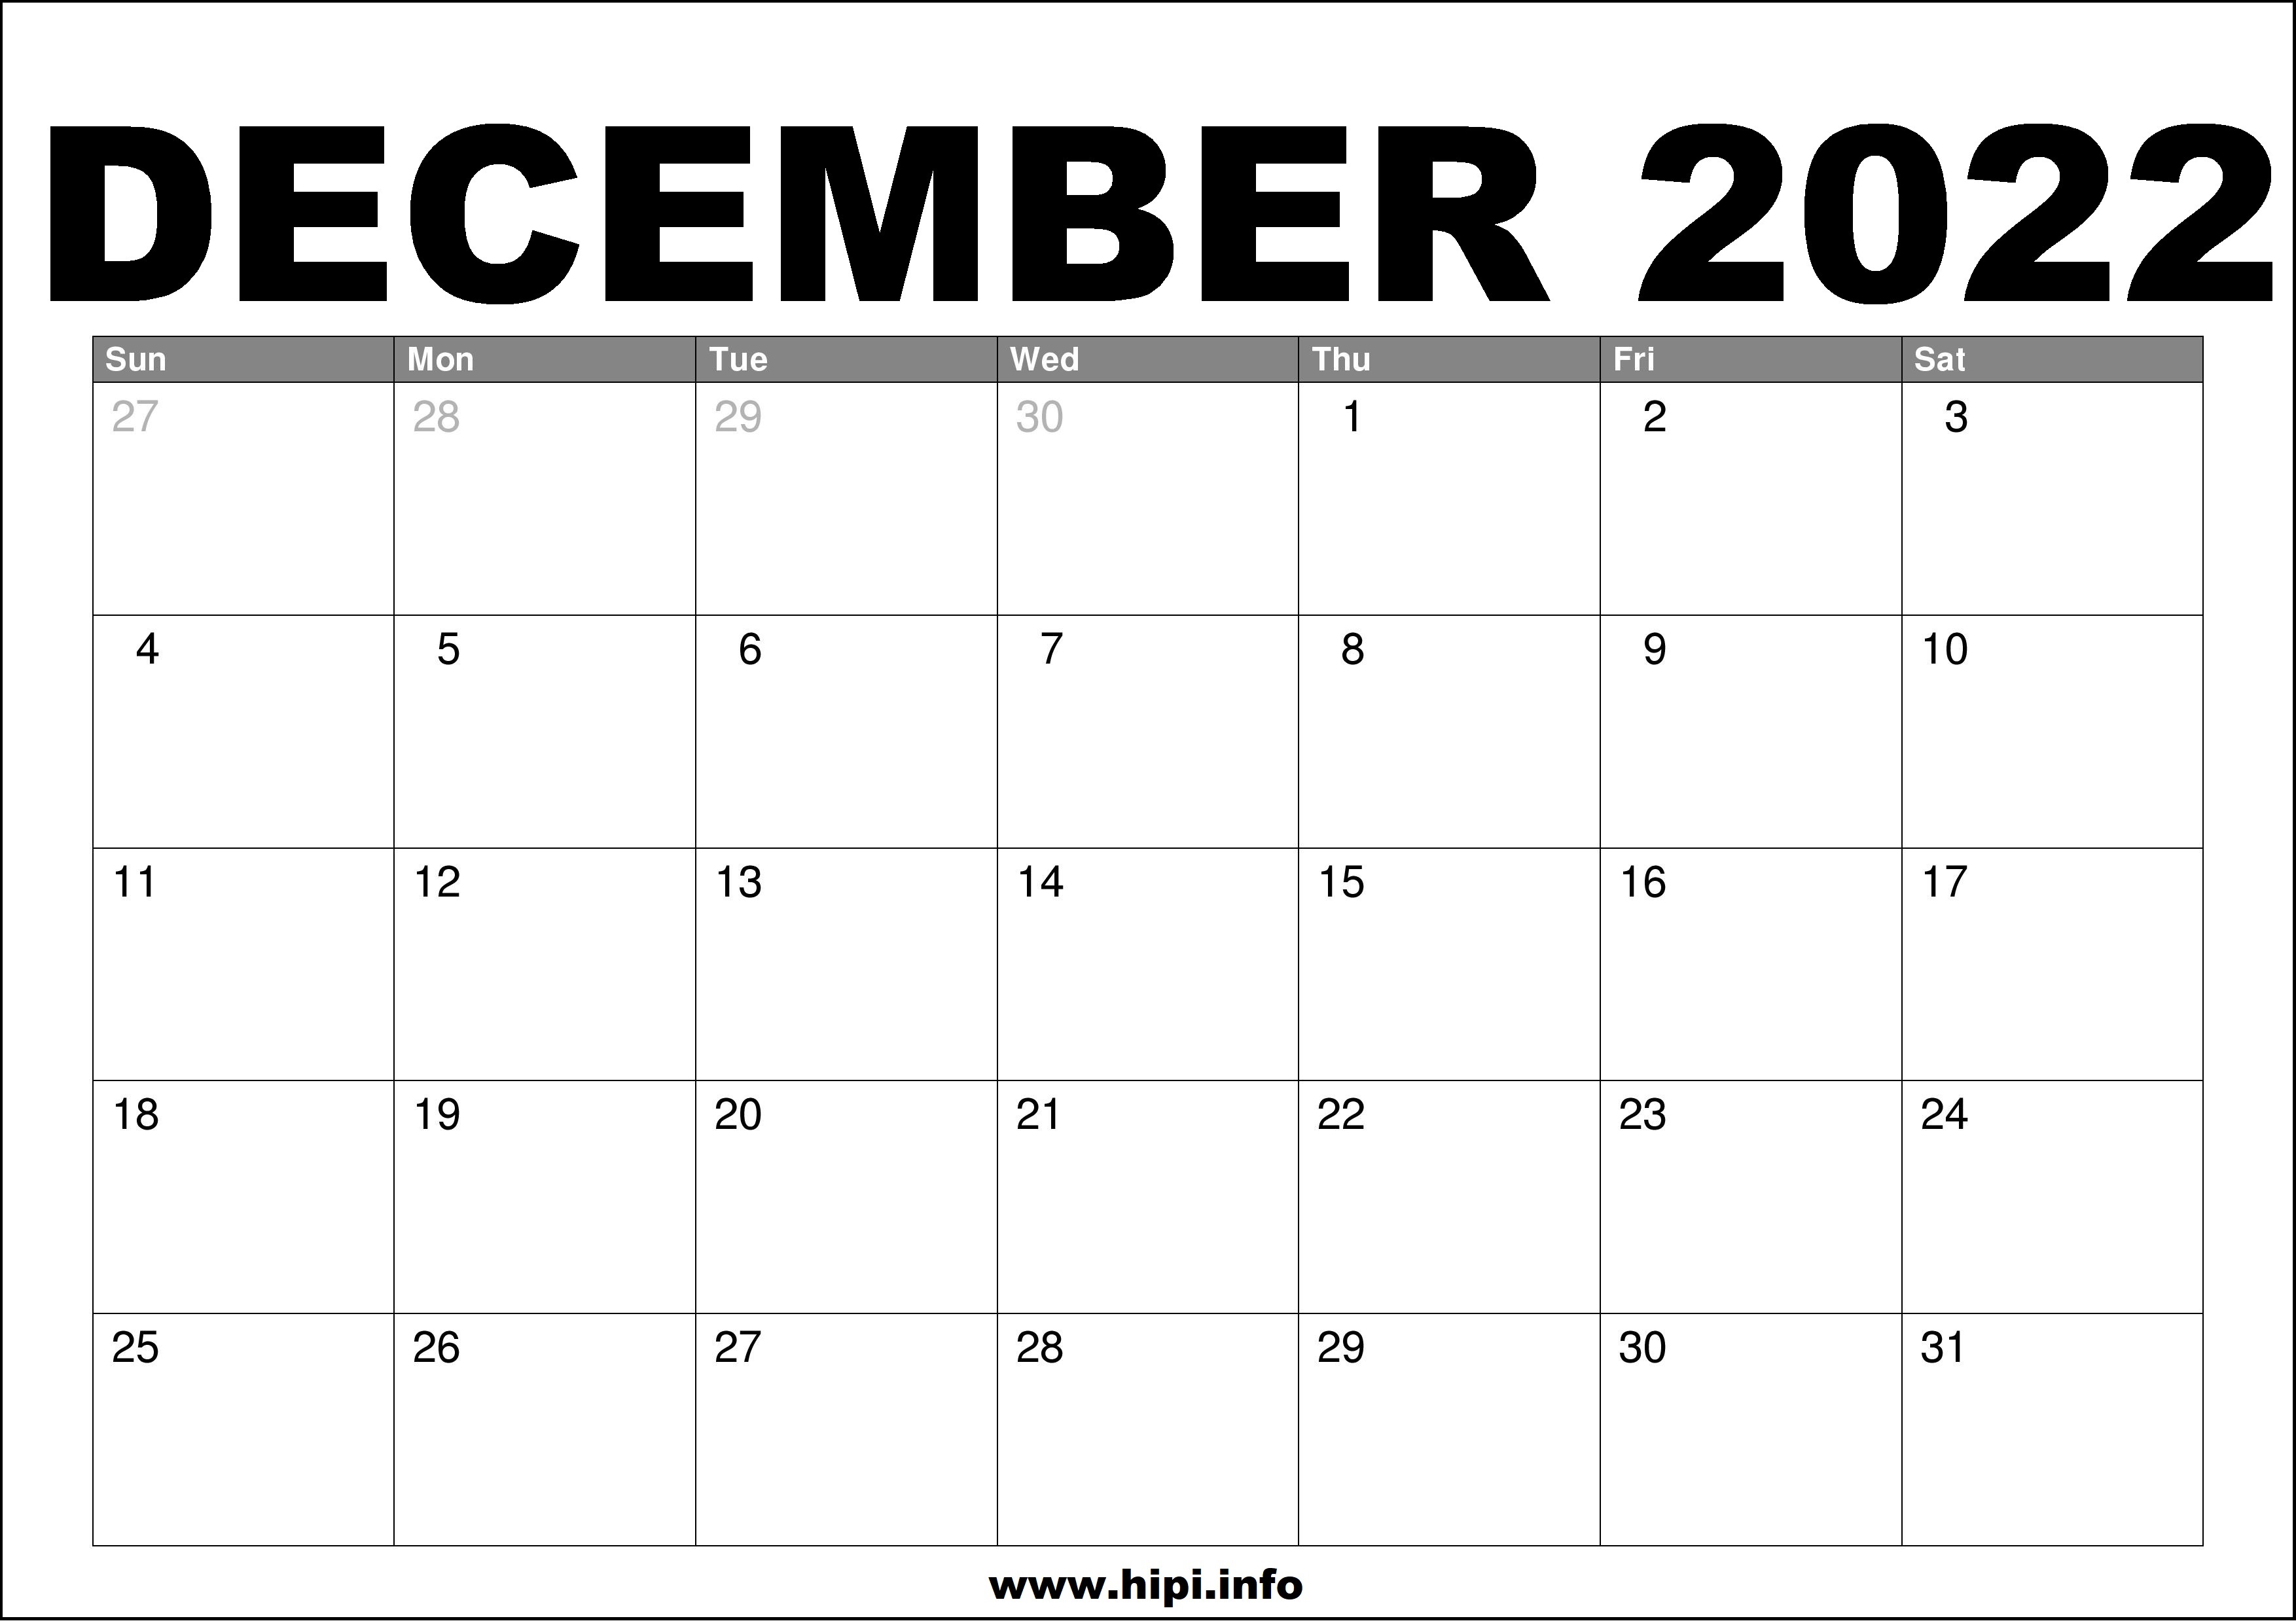 December 2022 Free Printable Calendar December 2022 Calendar Printable Free - Hipi.info | Calendars Printable Free